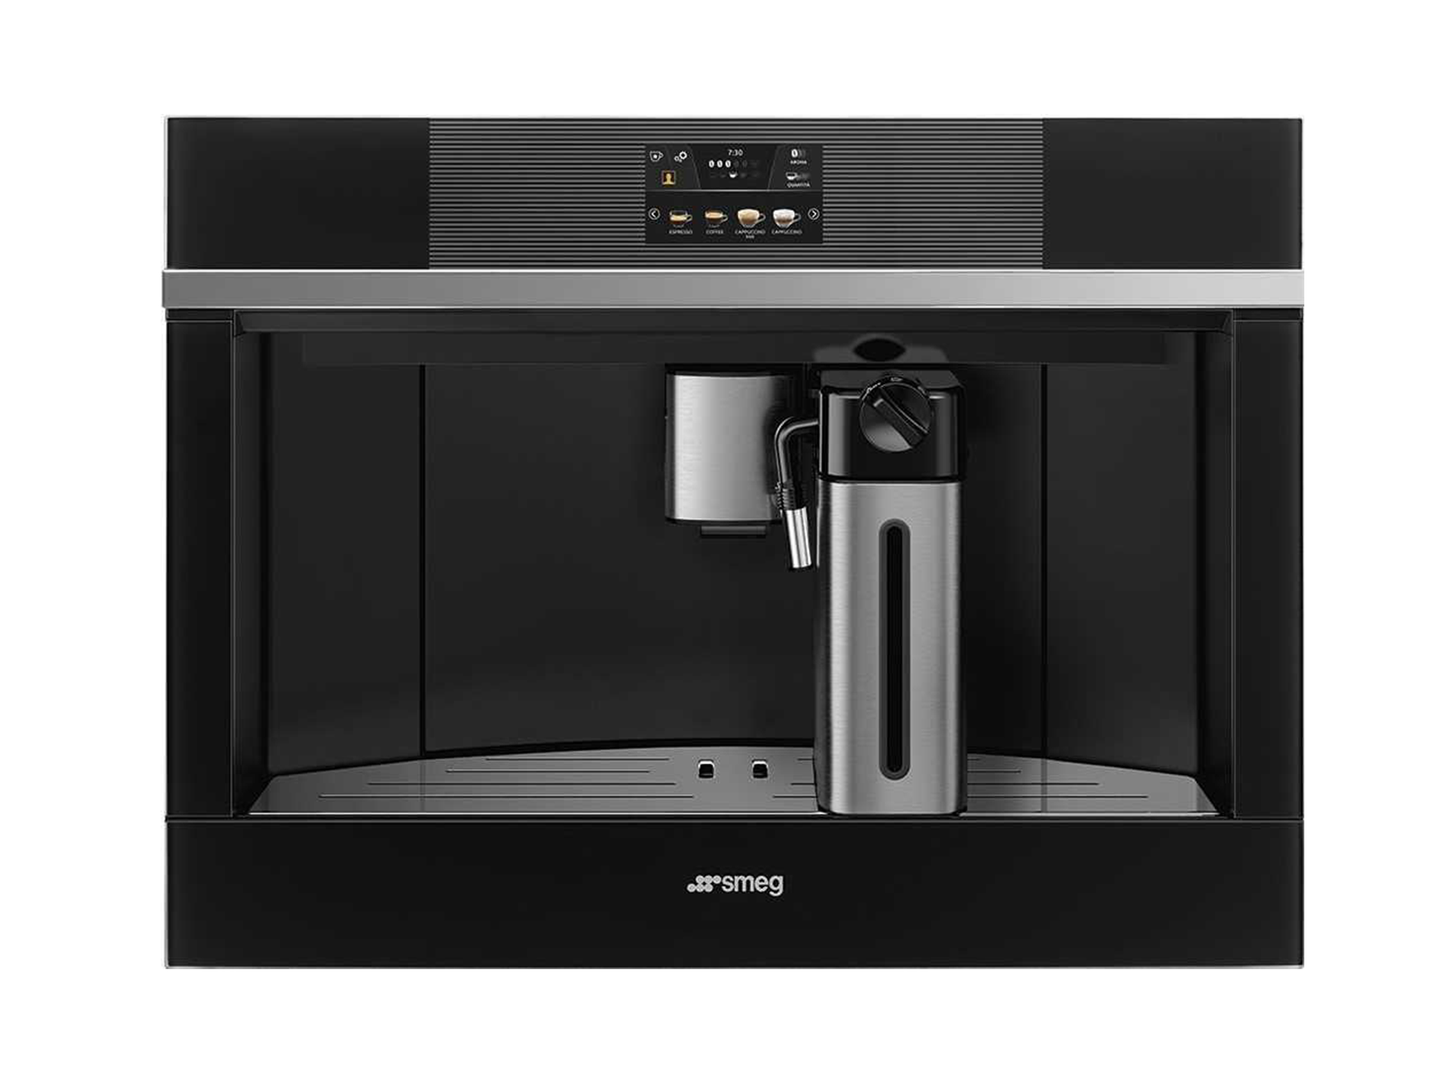 Smeg CMS4104N 60x45cm Linea compact built-in coffee machine